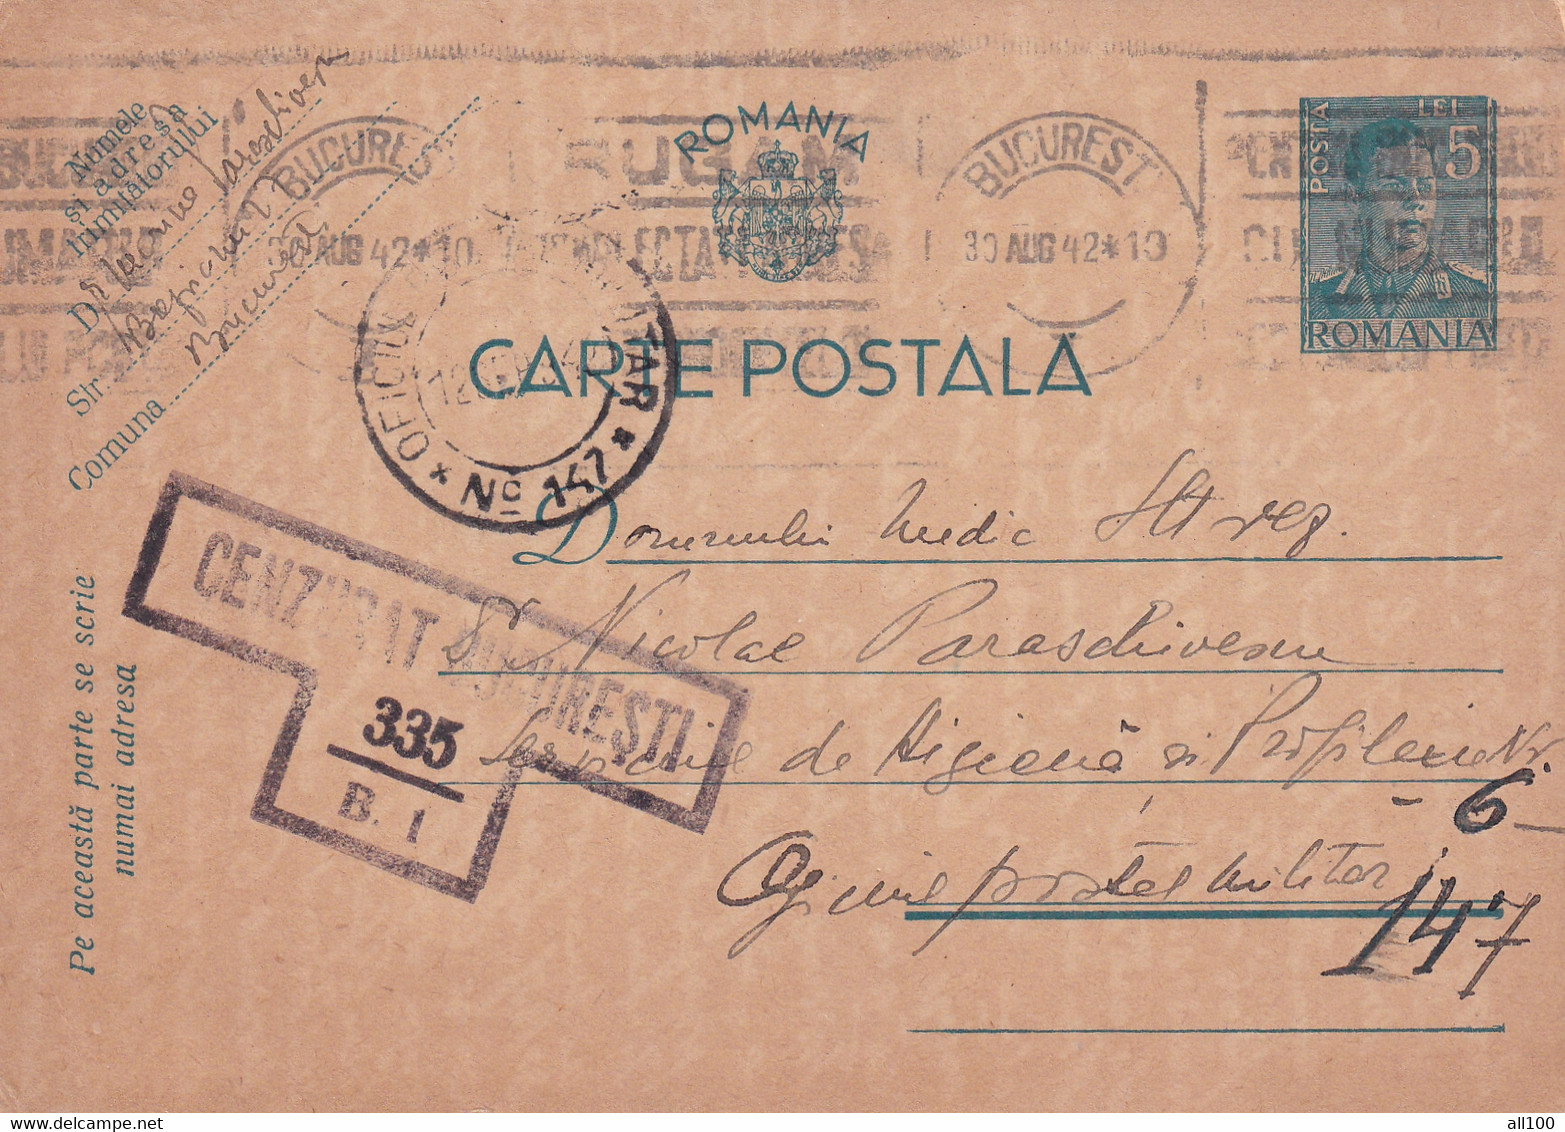 A16409 - POSTAL STATIONERY KING MICHAEL ROMANIA  CARTA POSTALA MILITARA 1943 USED  CENZORED CENZURAT BUCURESTI - World War 2 Letters